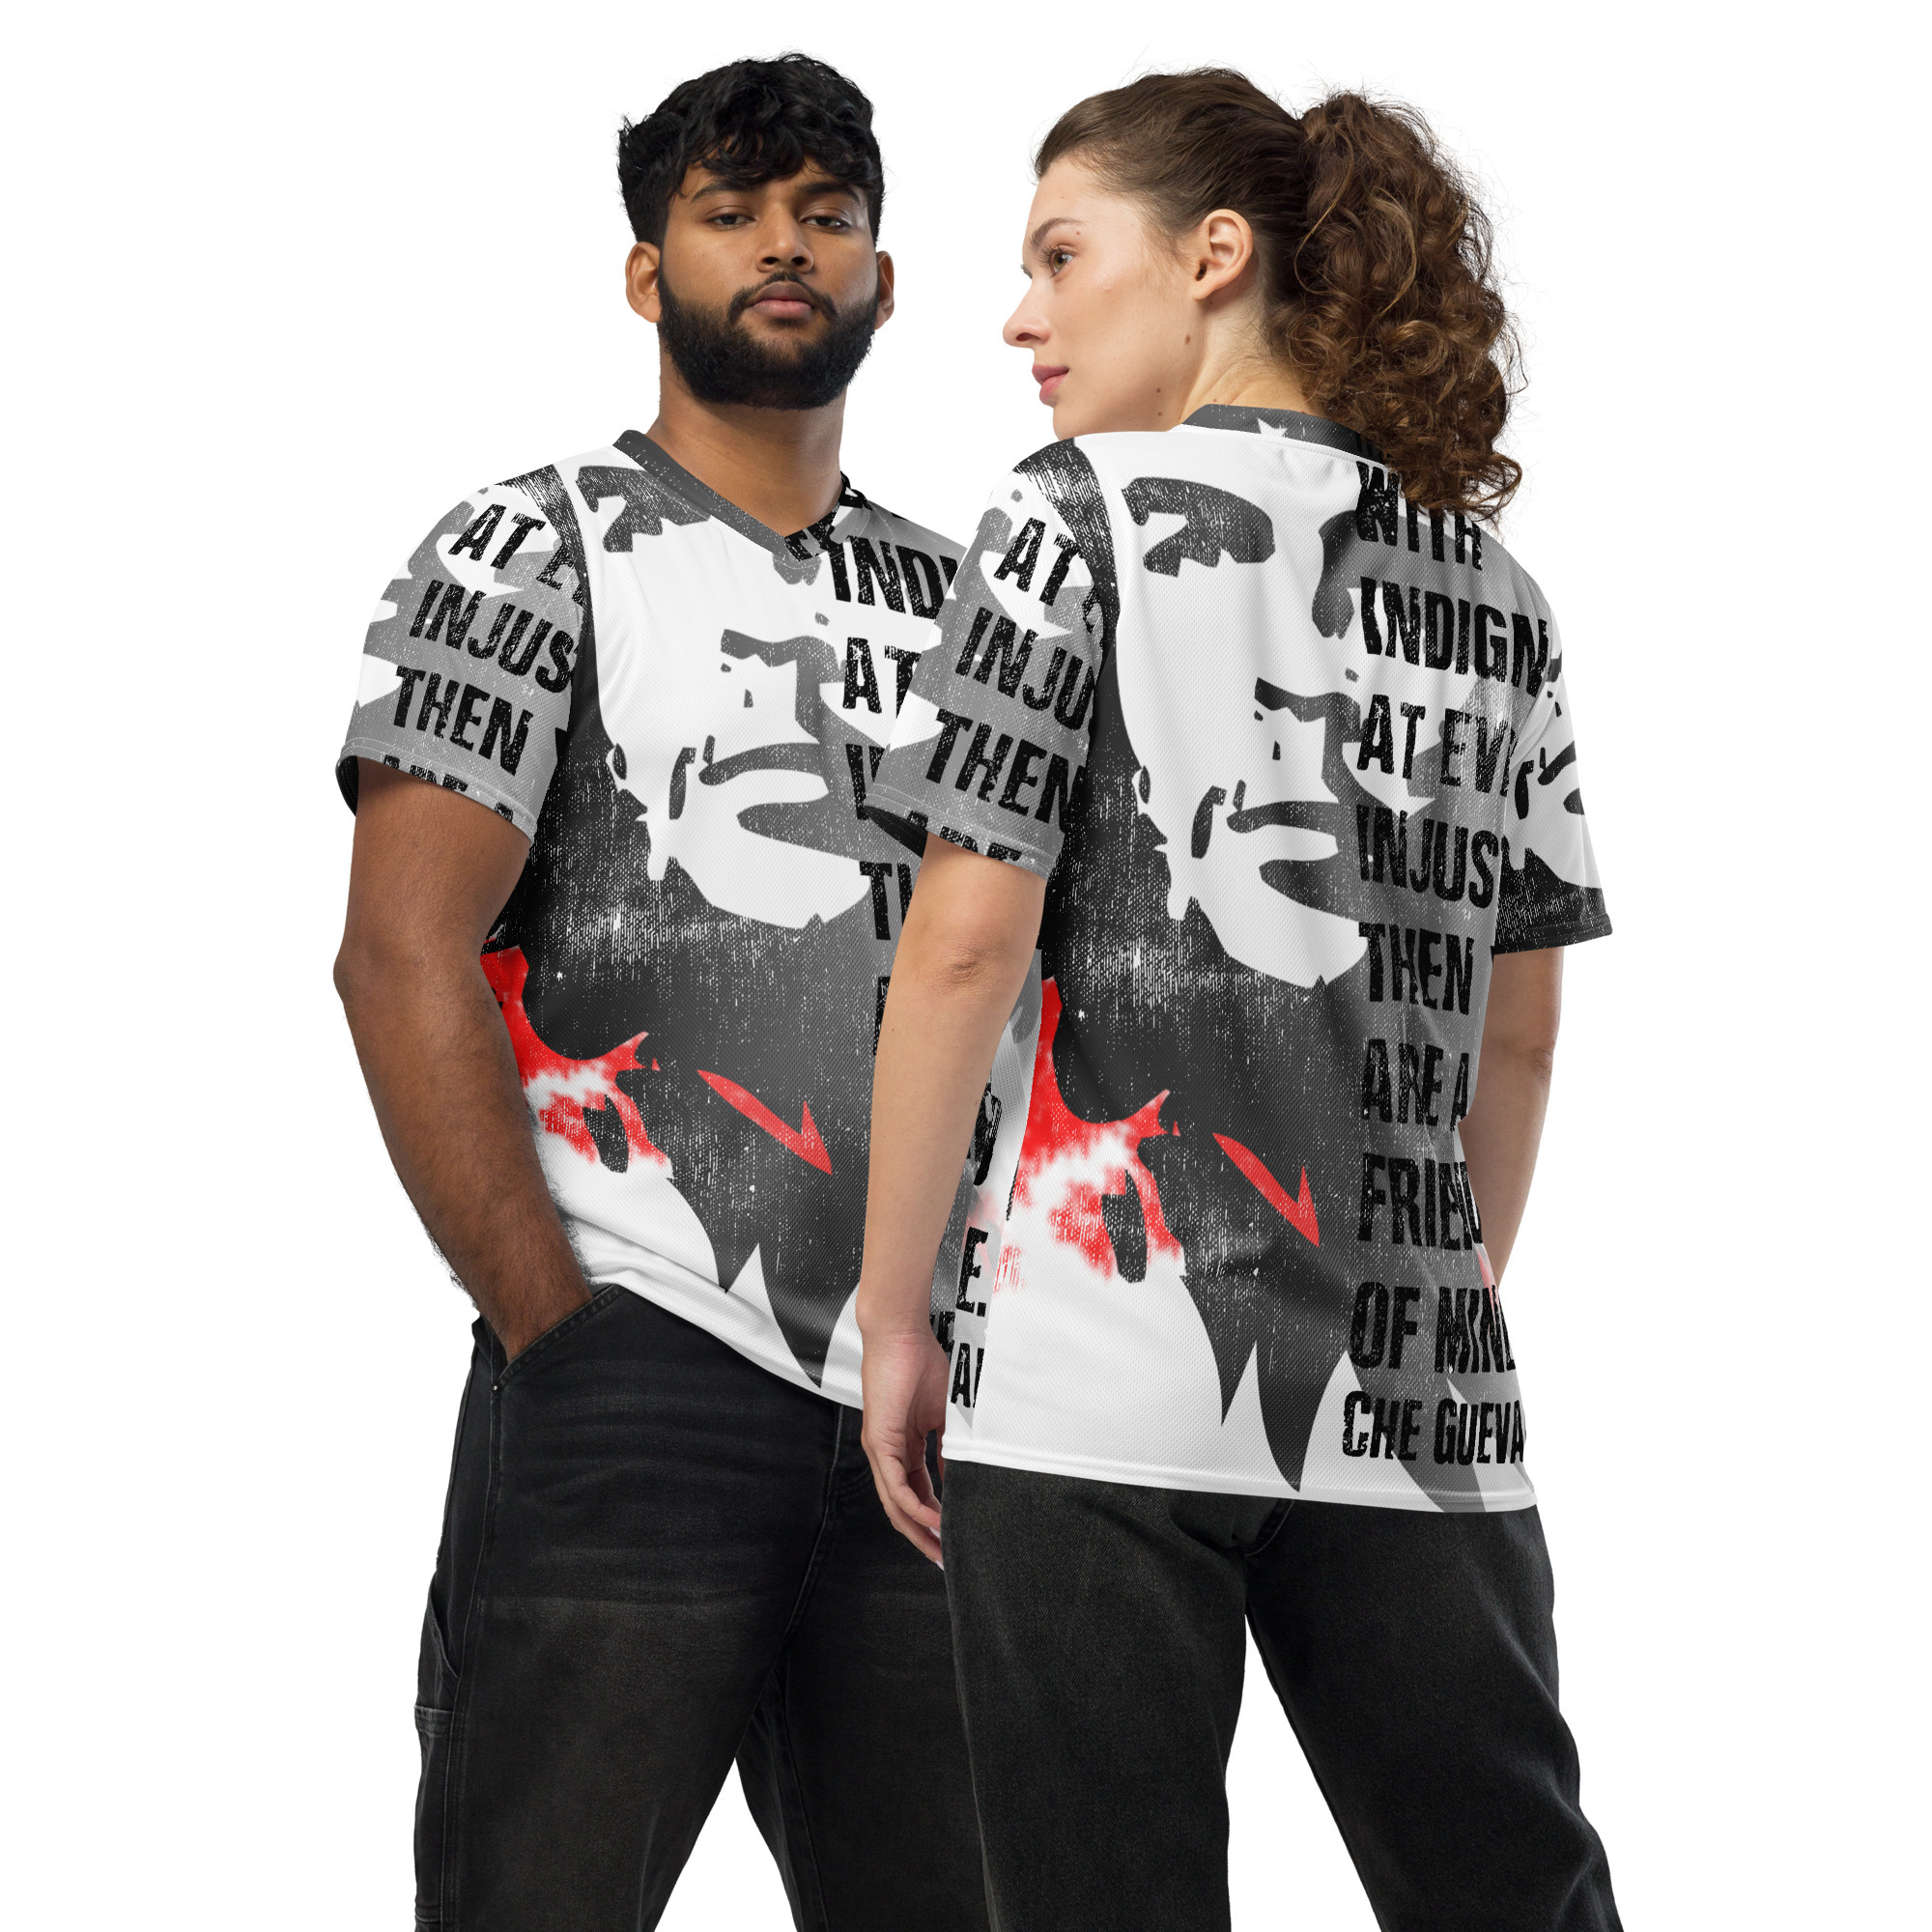 ♧Che Guevara Vintage Revolutionary Quote♧ - Unisex t-shirt